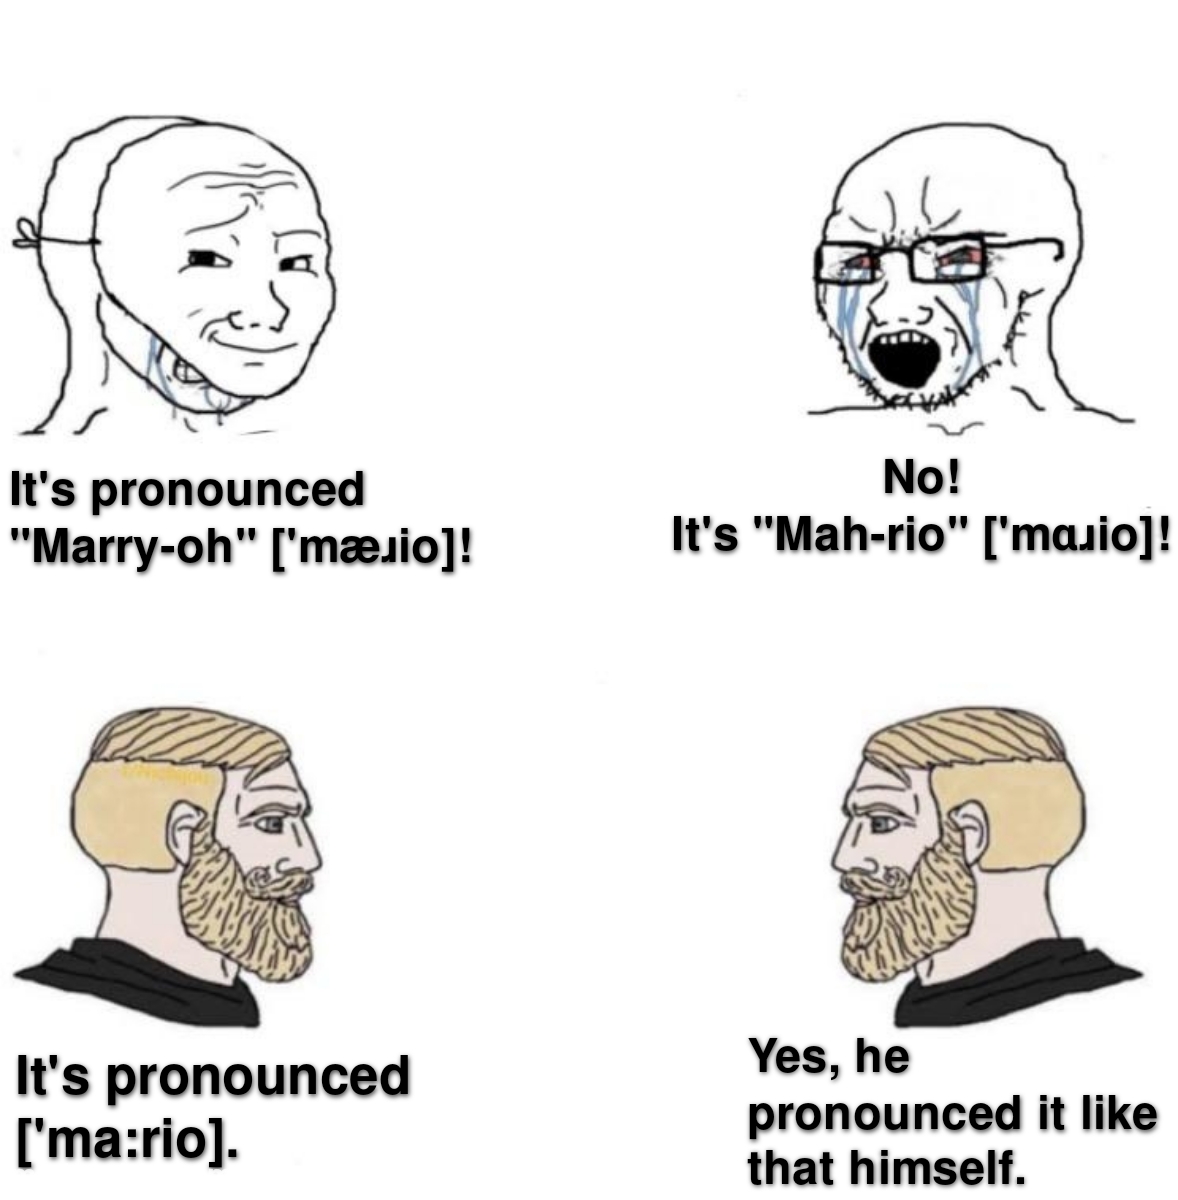 dank memes - chad we know meme template - It's pronounced "Marryoh" 'm.io! No! It's "Mahrio" 'mazio! It's pronounced 'mario. Yes, he pronounced it that himself.